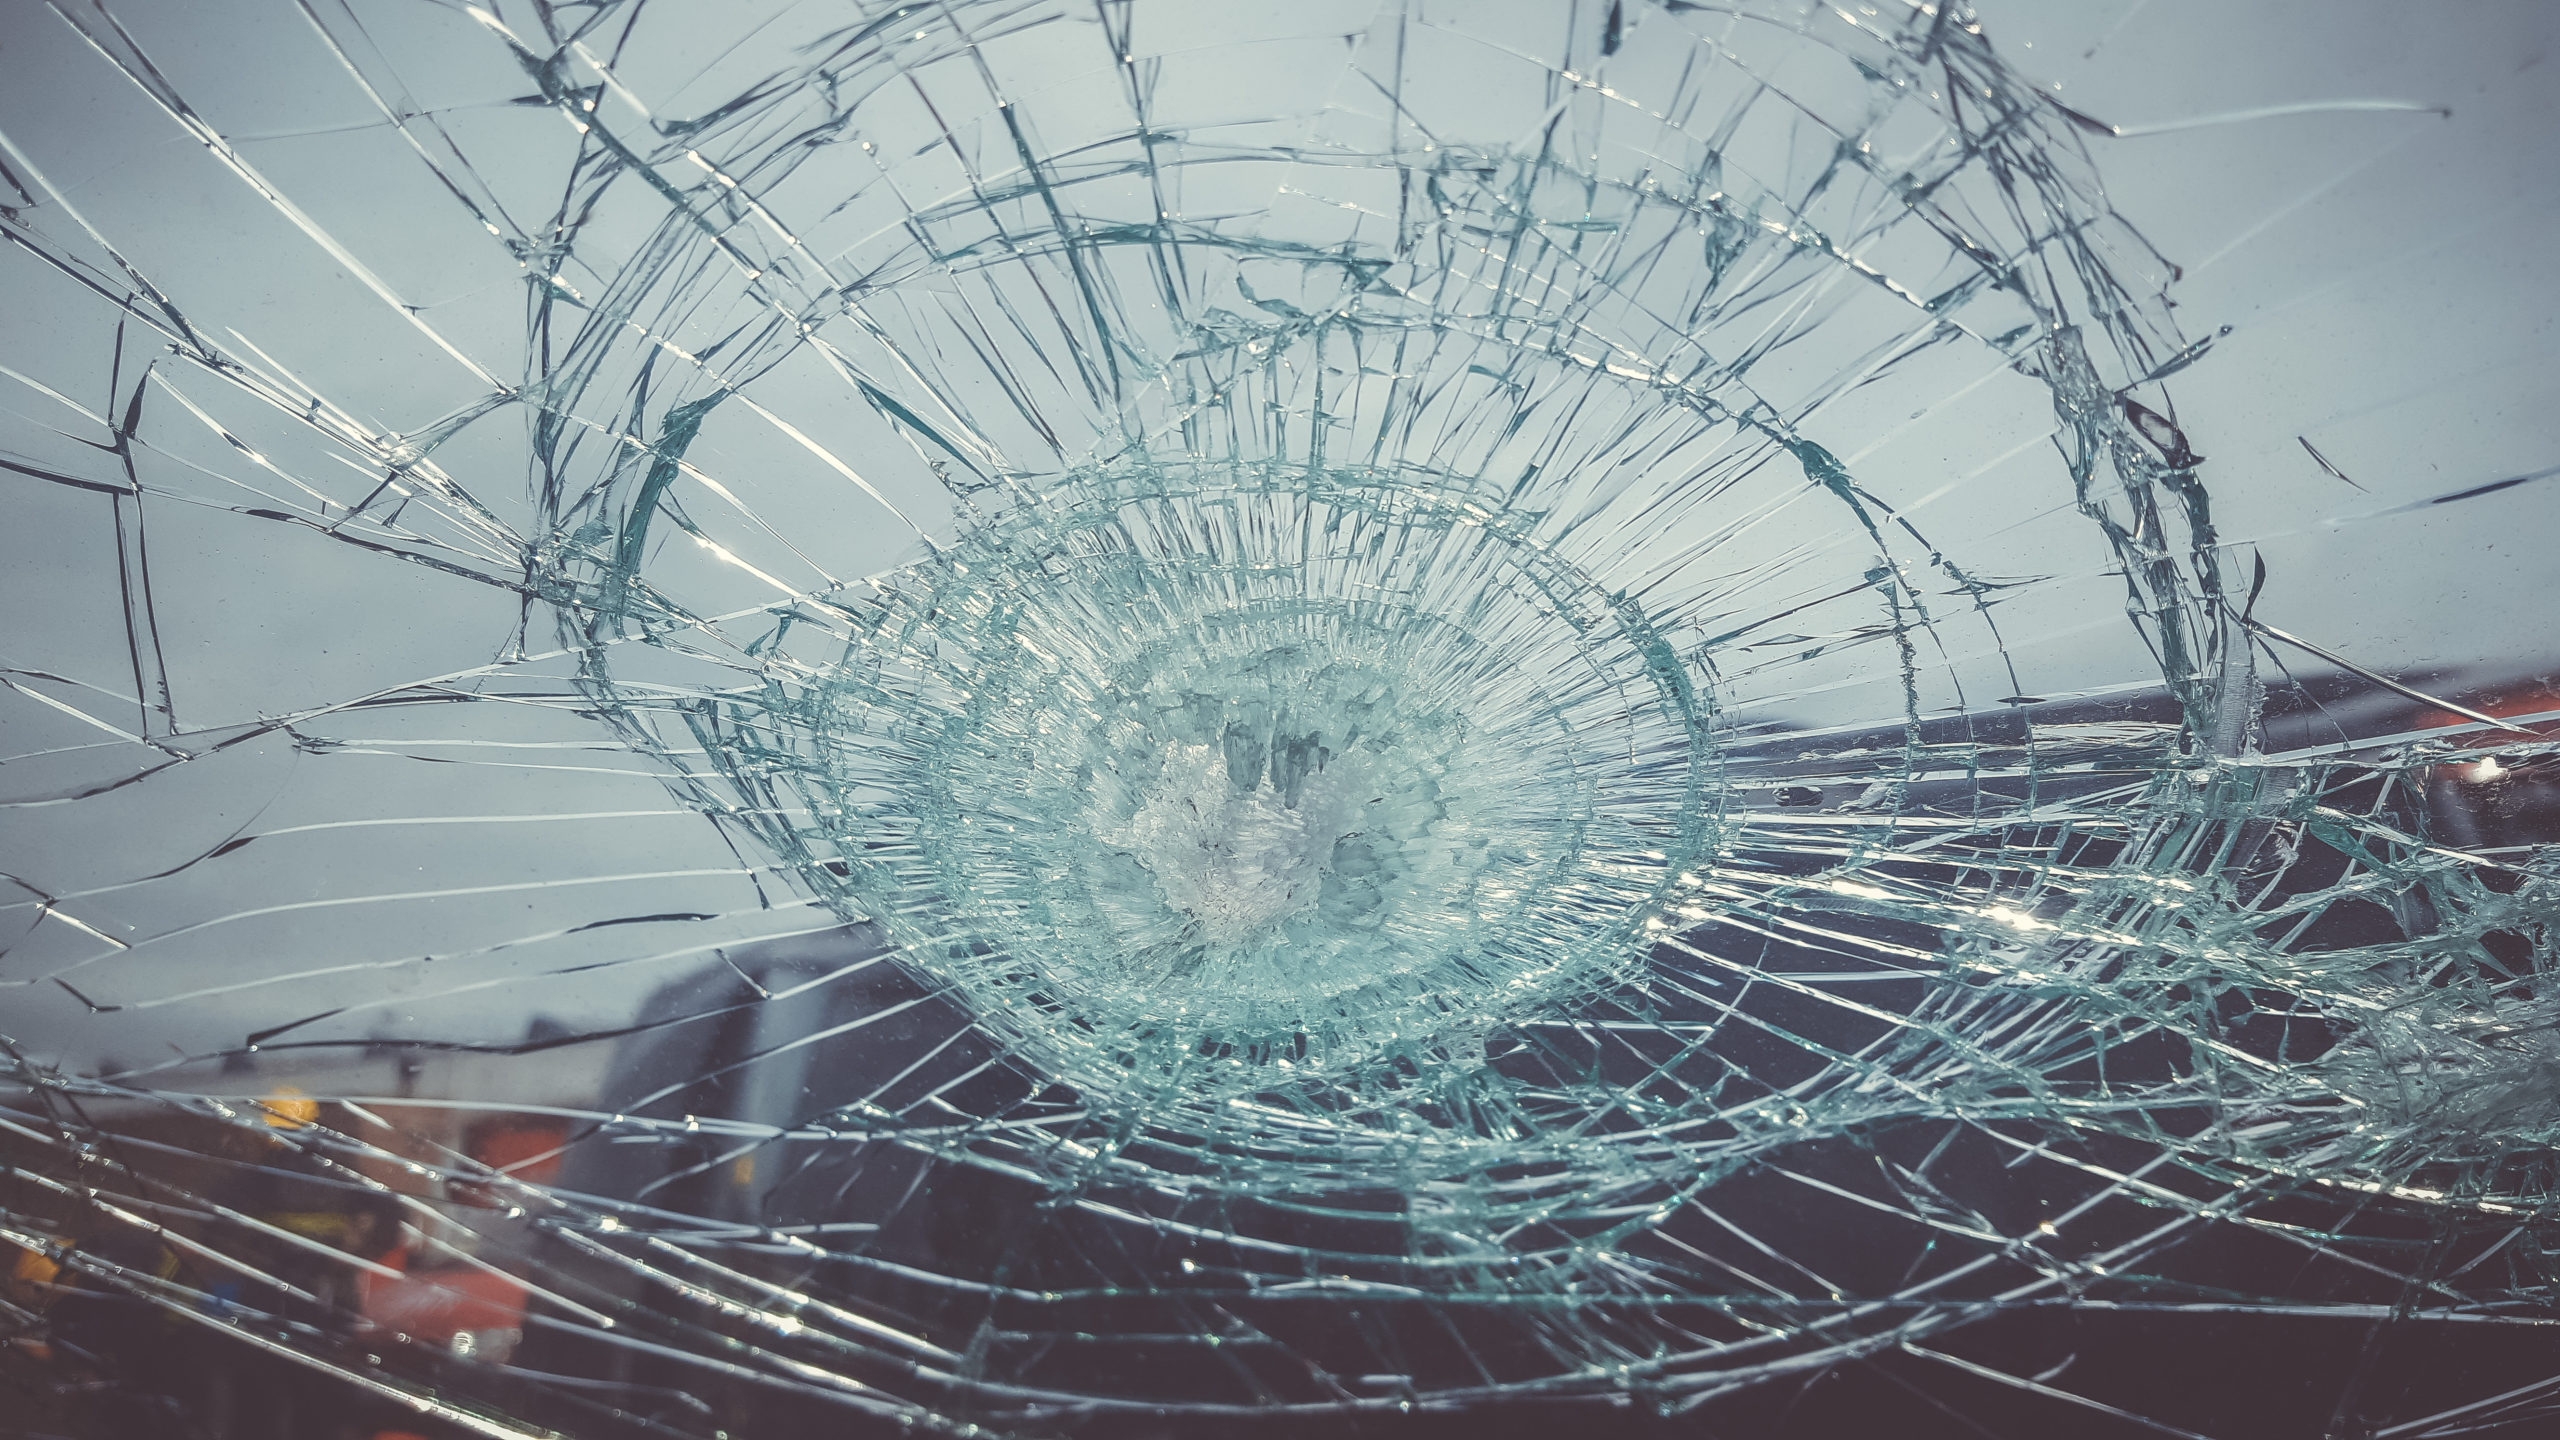 Smashed windshield glass